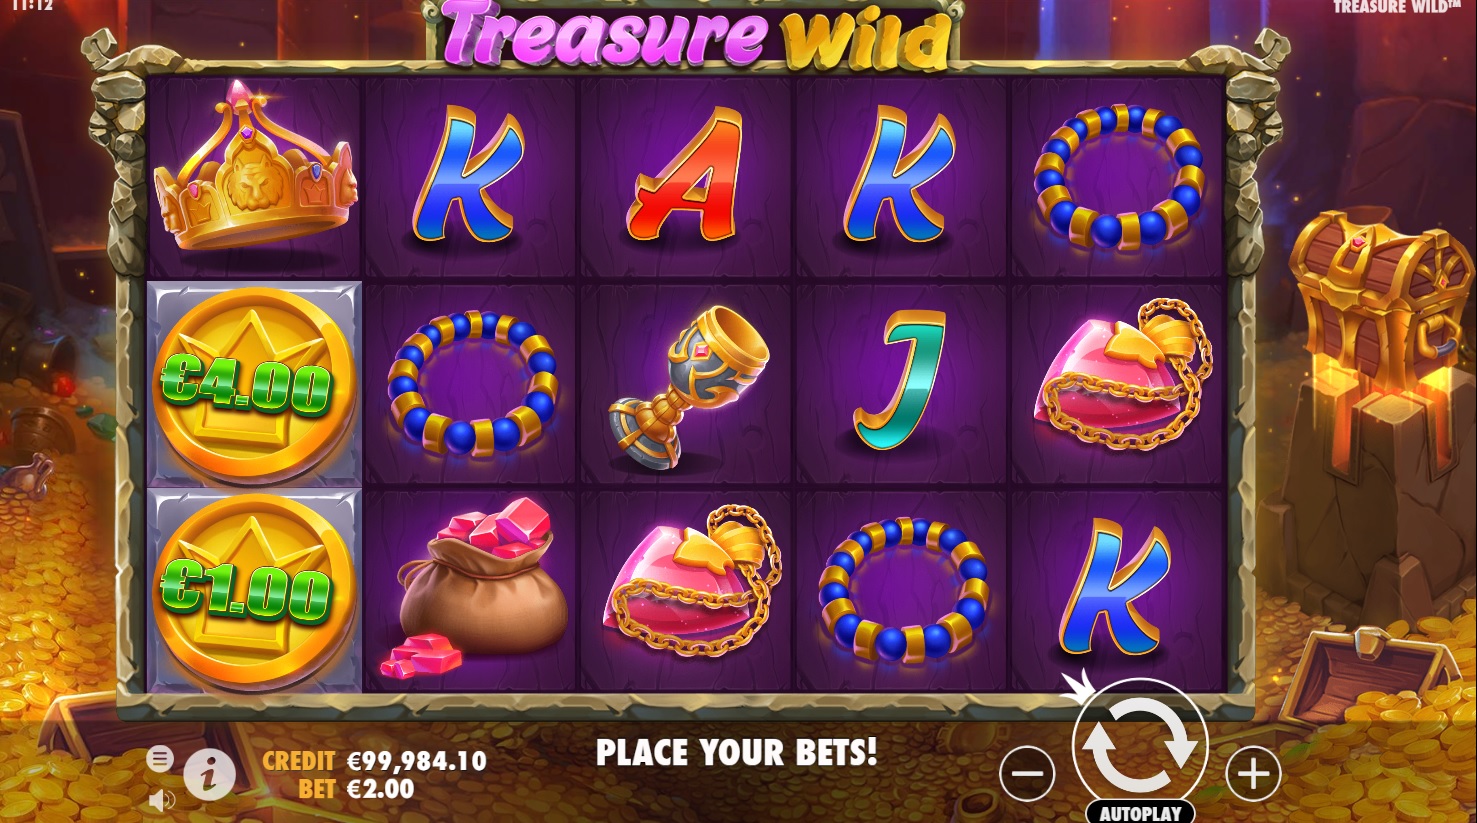 Treasure Wild, base slot game